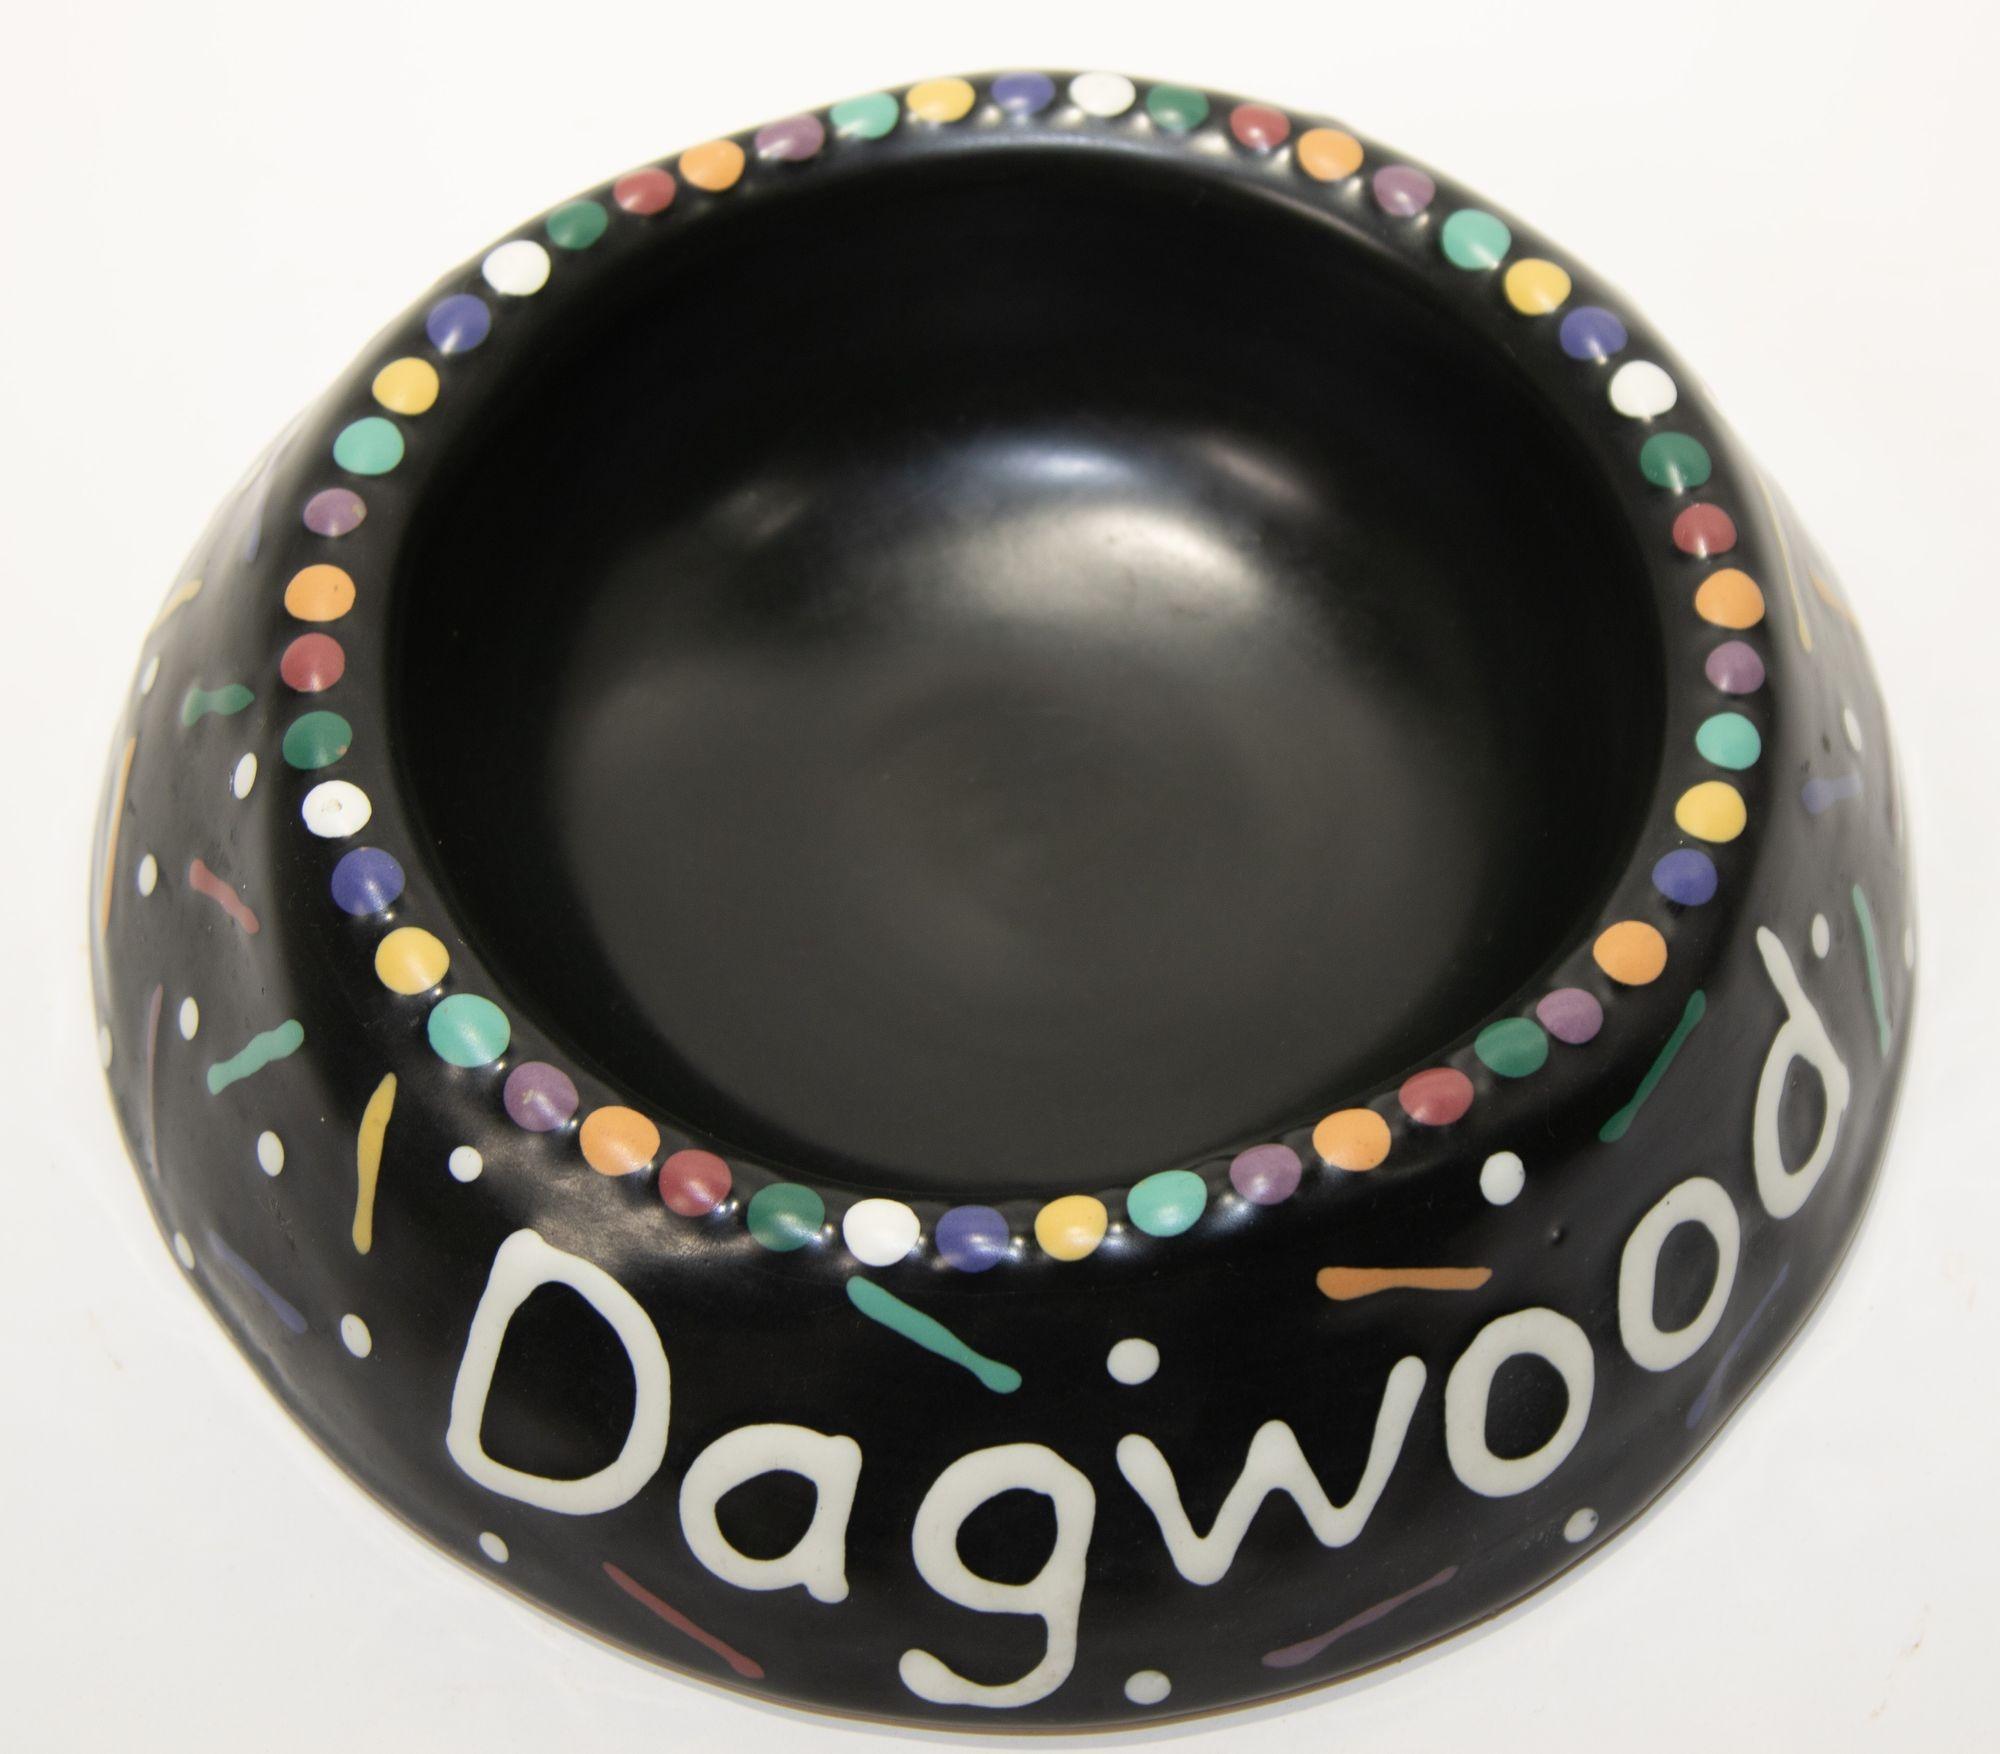 1994 Handcrafted Ceramic Bowl Signed by Luna Garcia For Sale 1